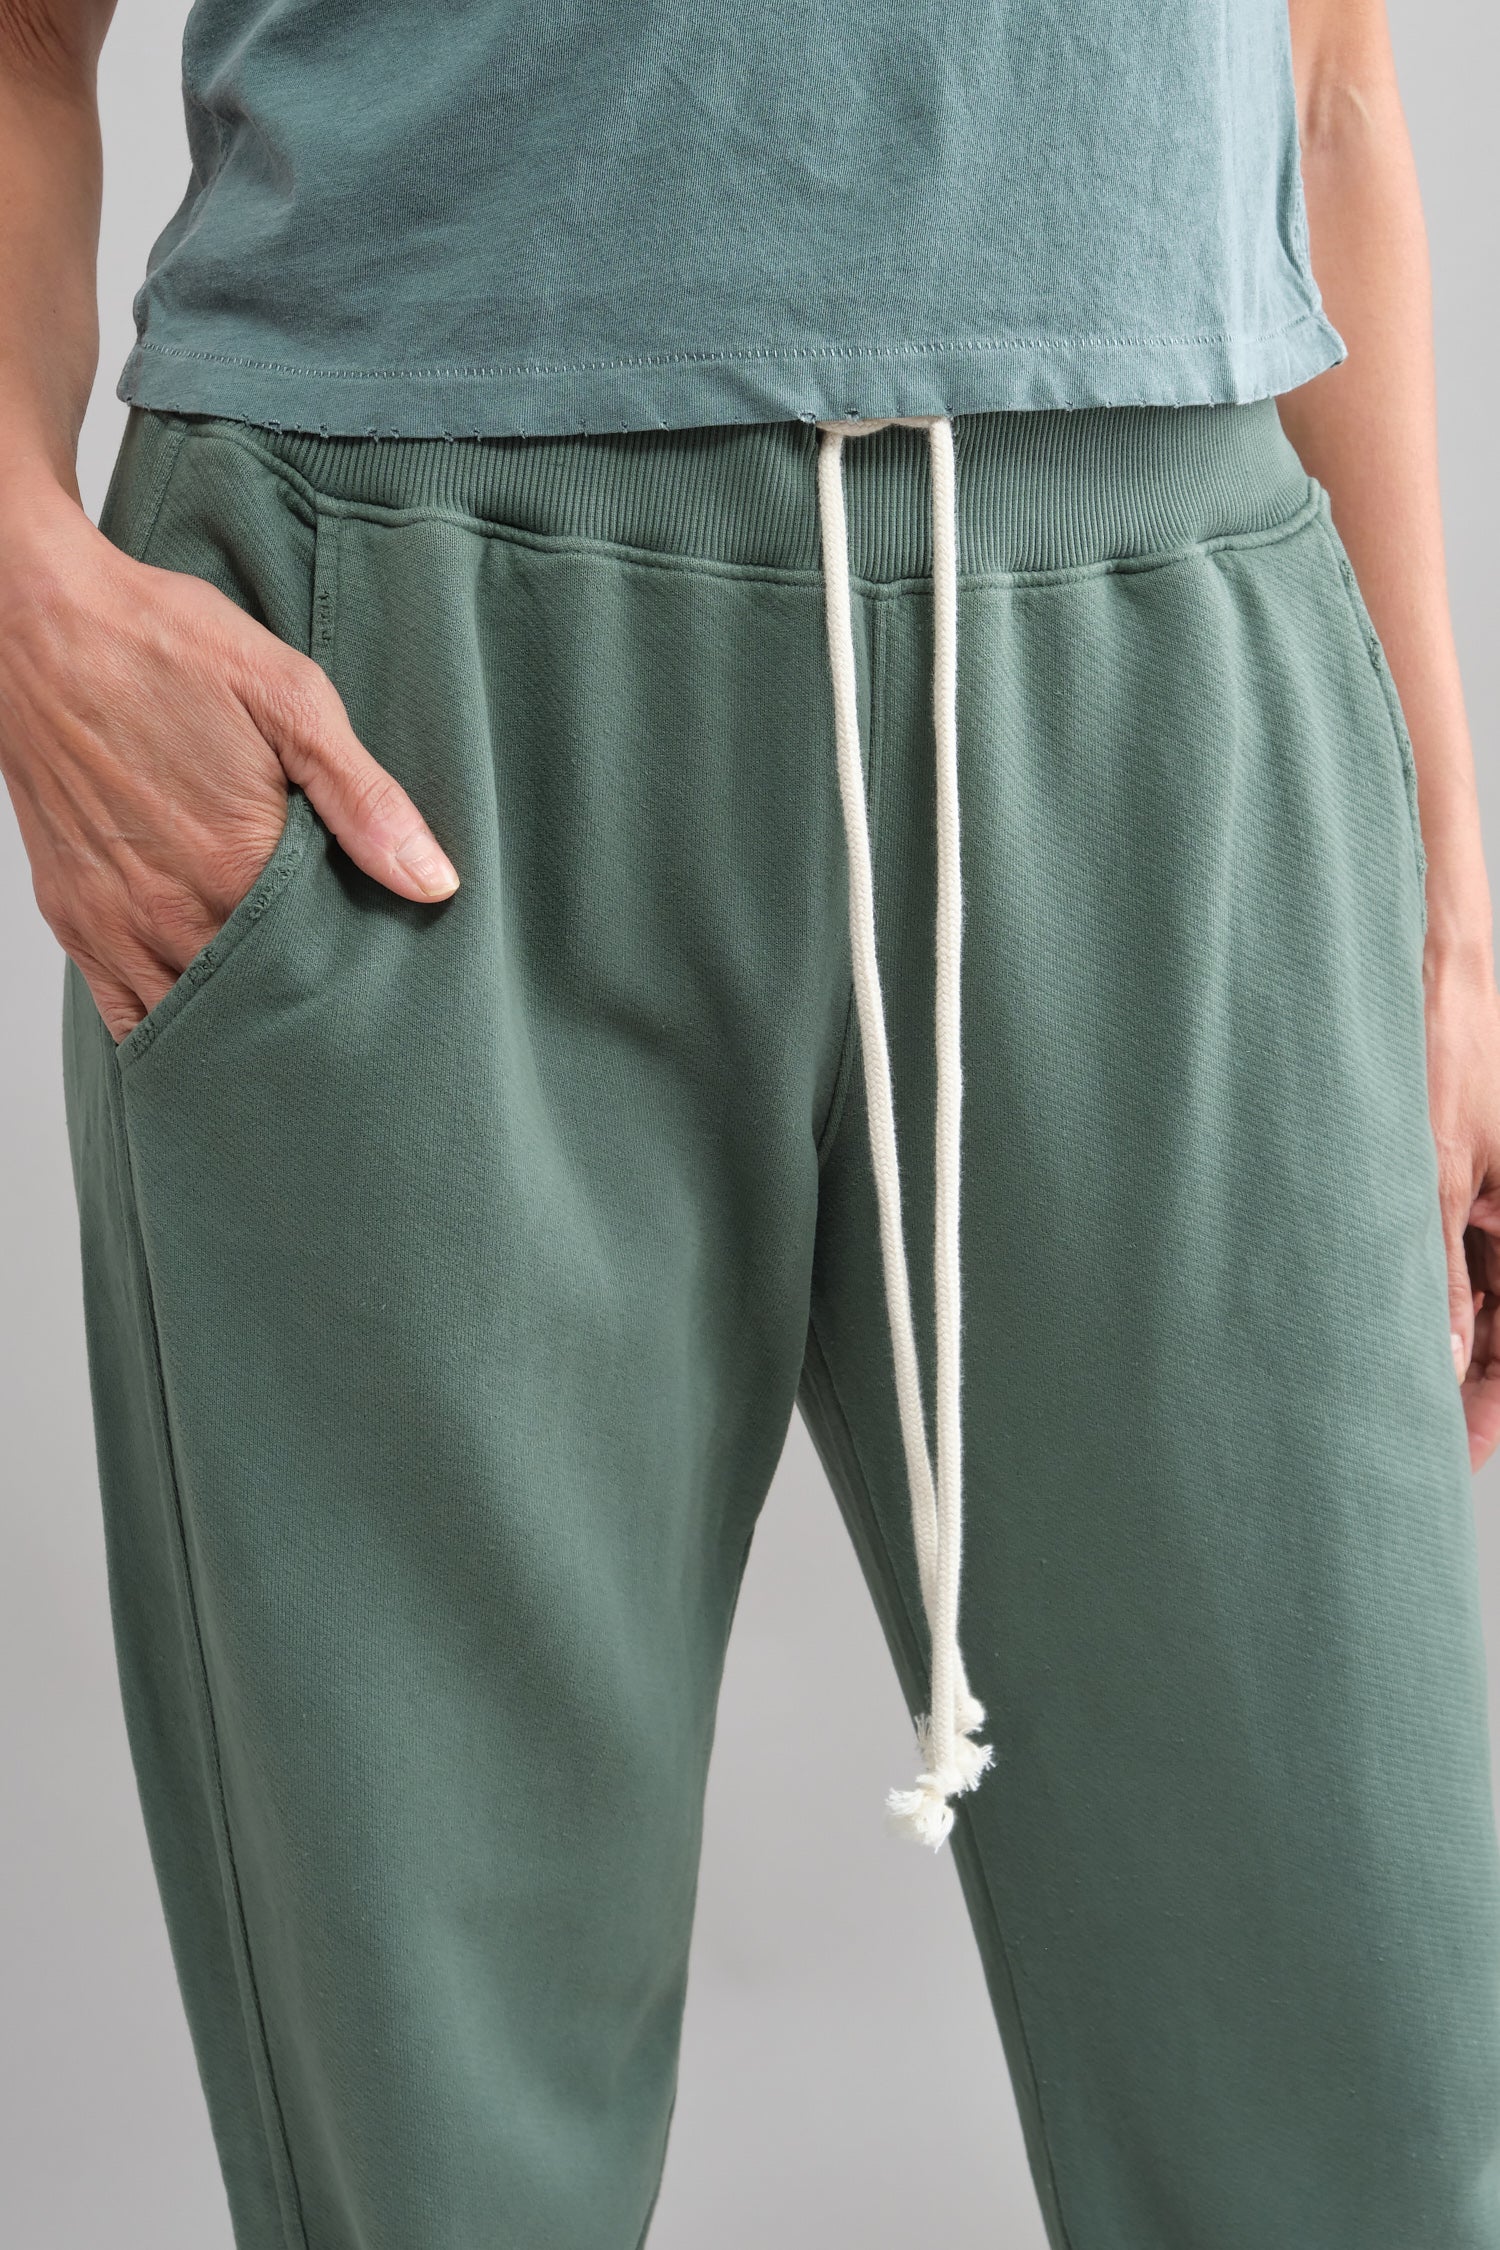 Pockets on Varsity Fleece Pant